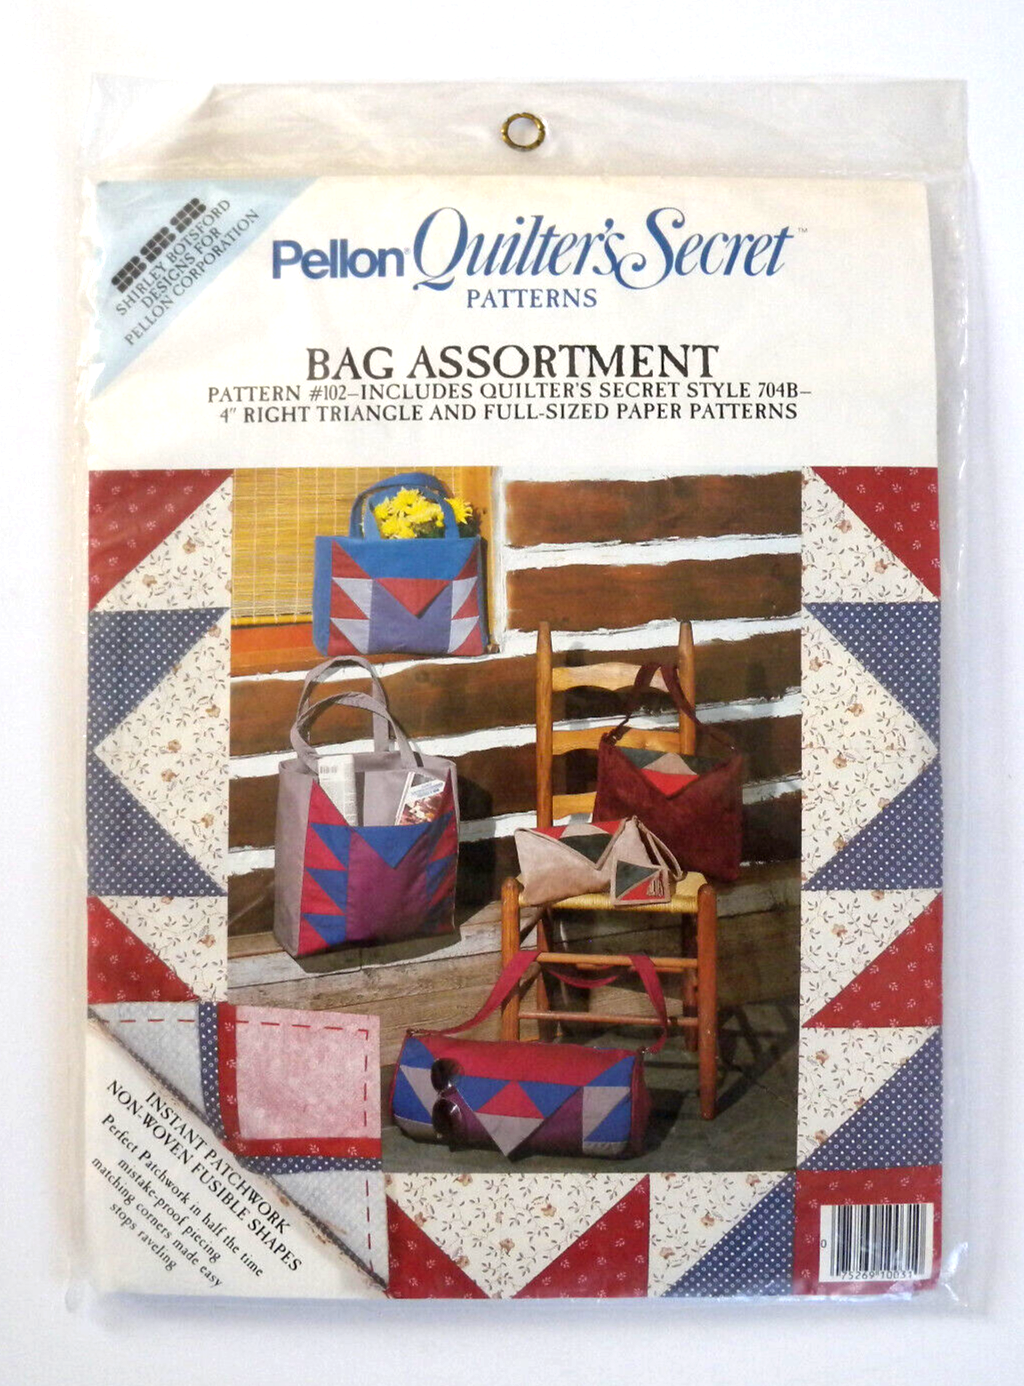 Pellon Quilter's Secret Patterns Bag Assortment Pattern #102 Shirley Botsford - $12.82